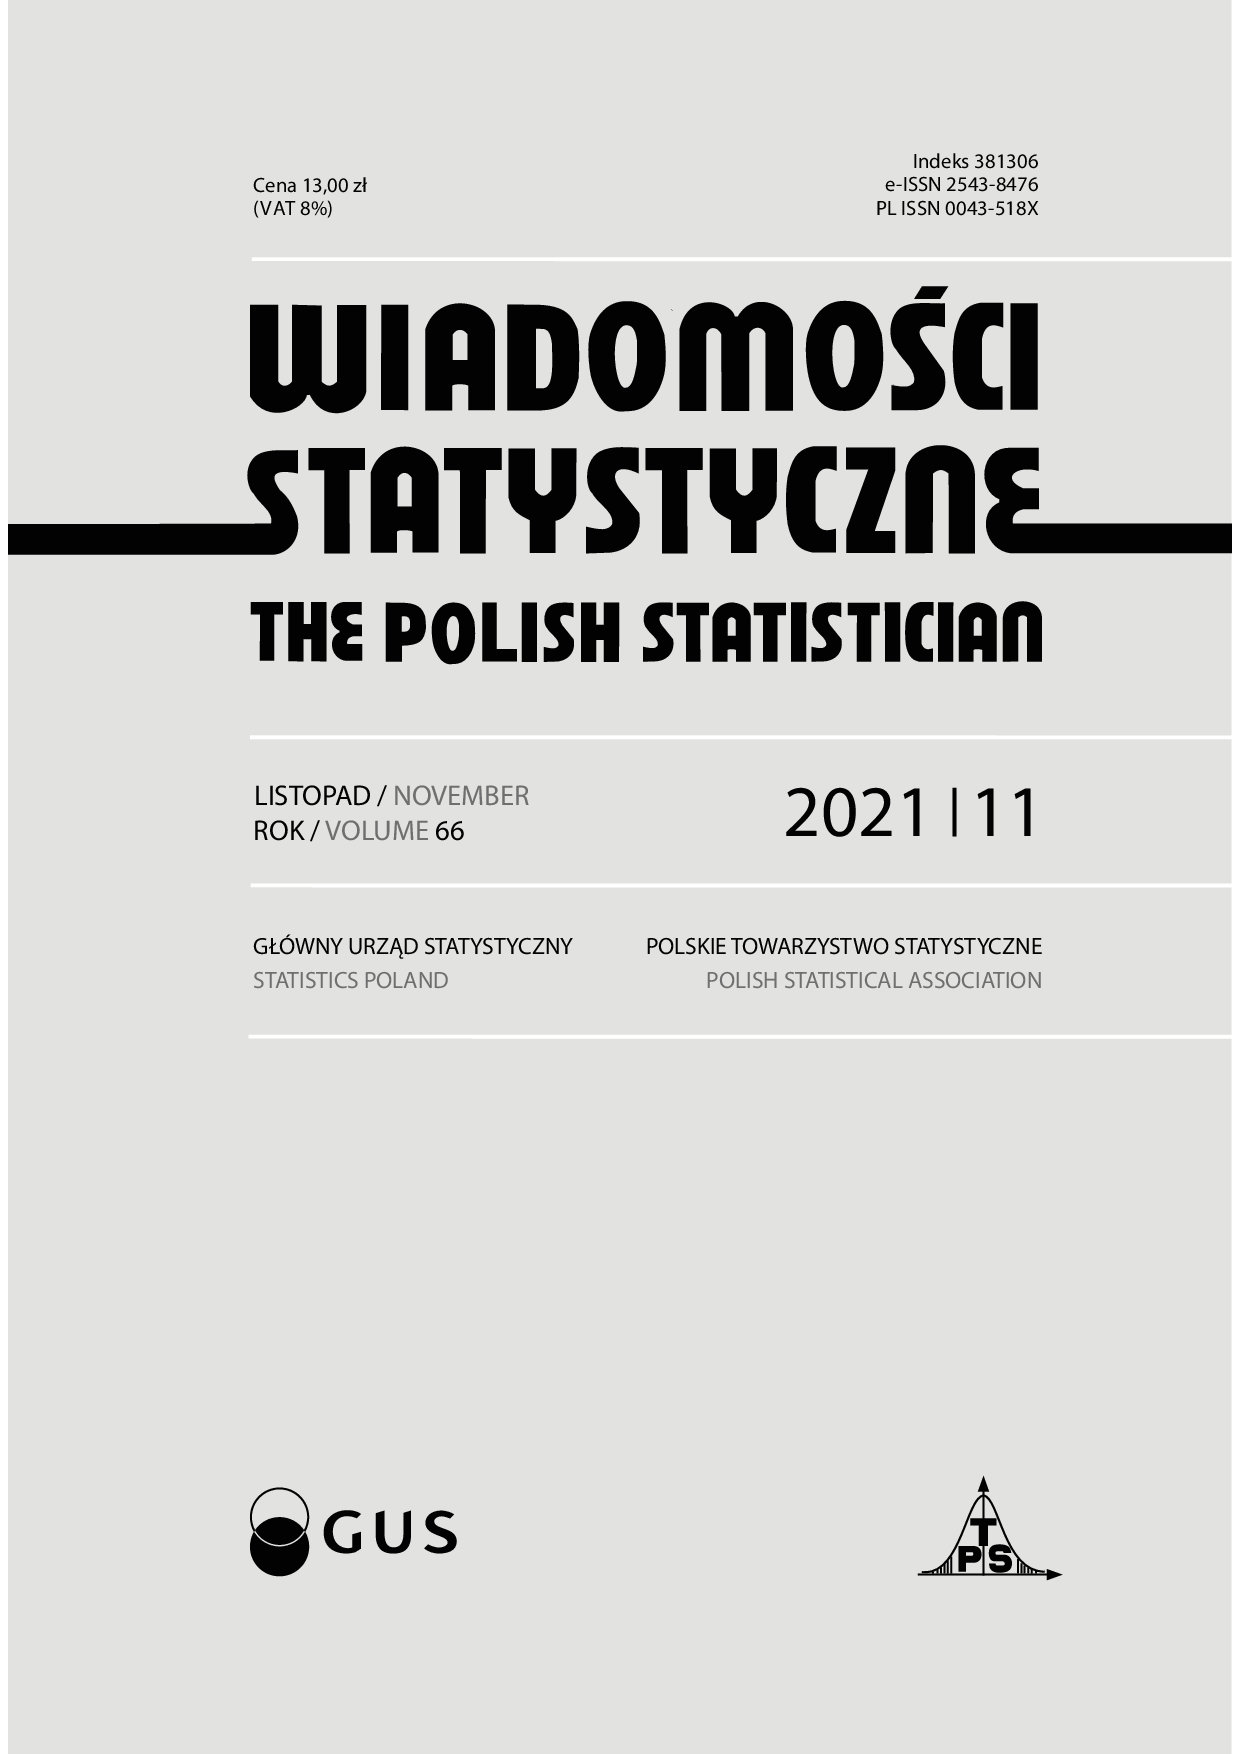 The level of socio-economic development of regions in Poland Cover Image